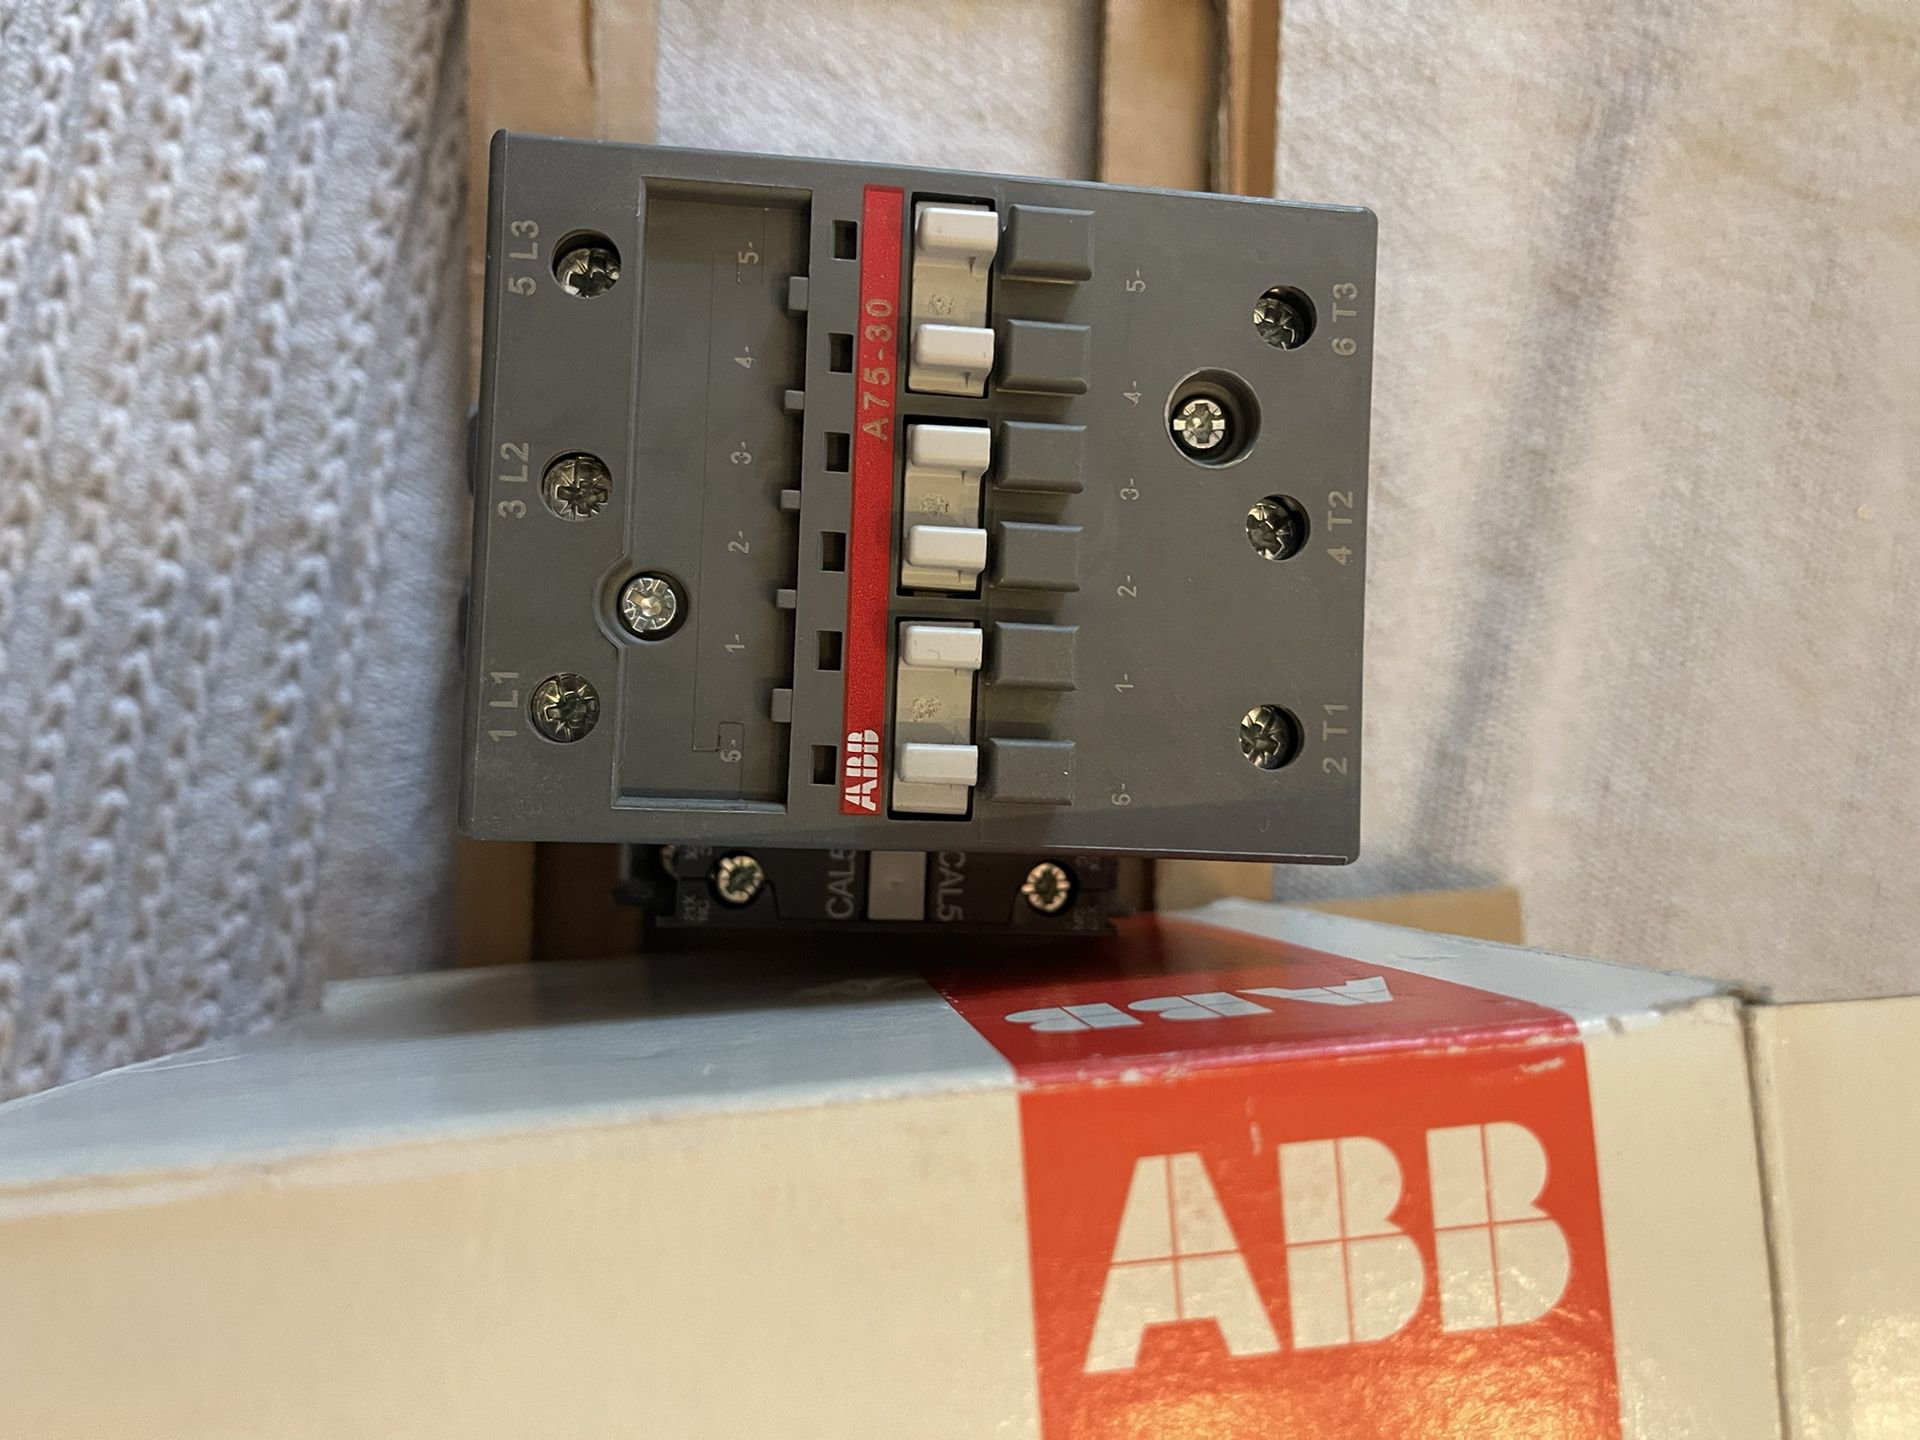 ABB A75-30-11-84 Contractor 